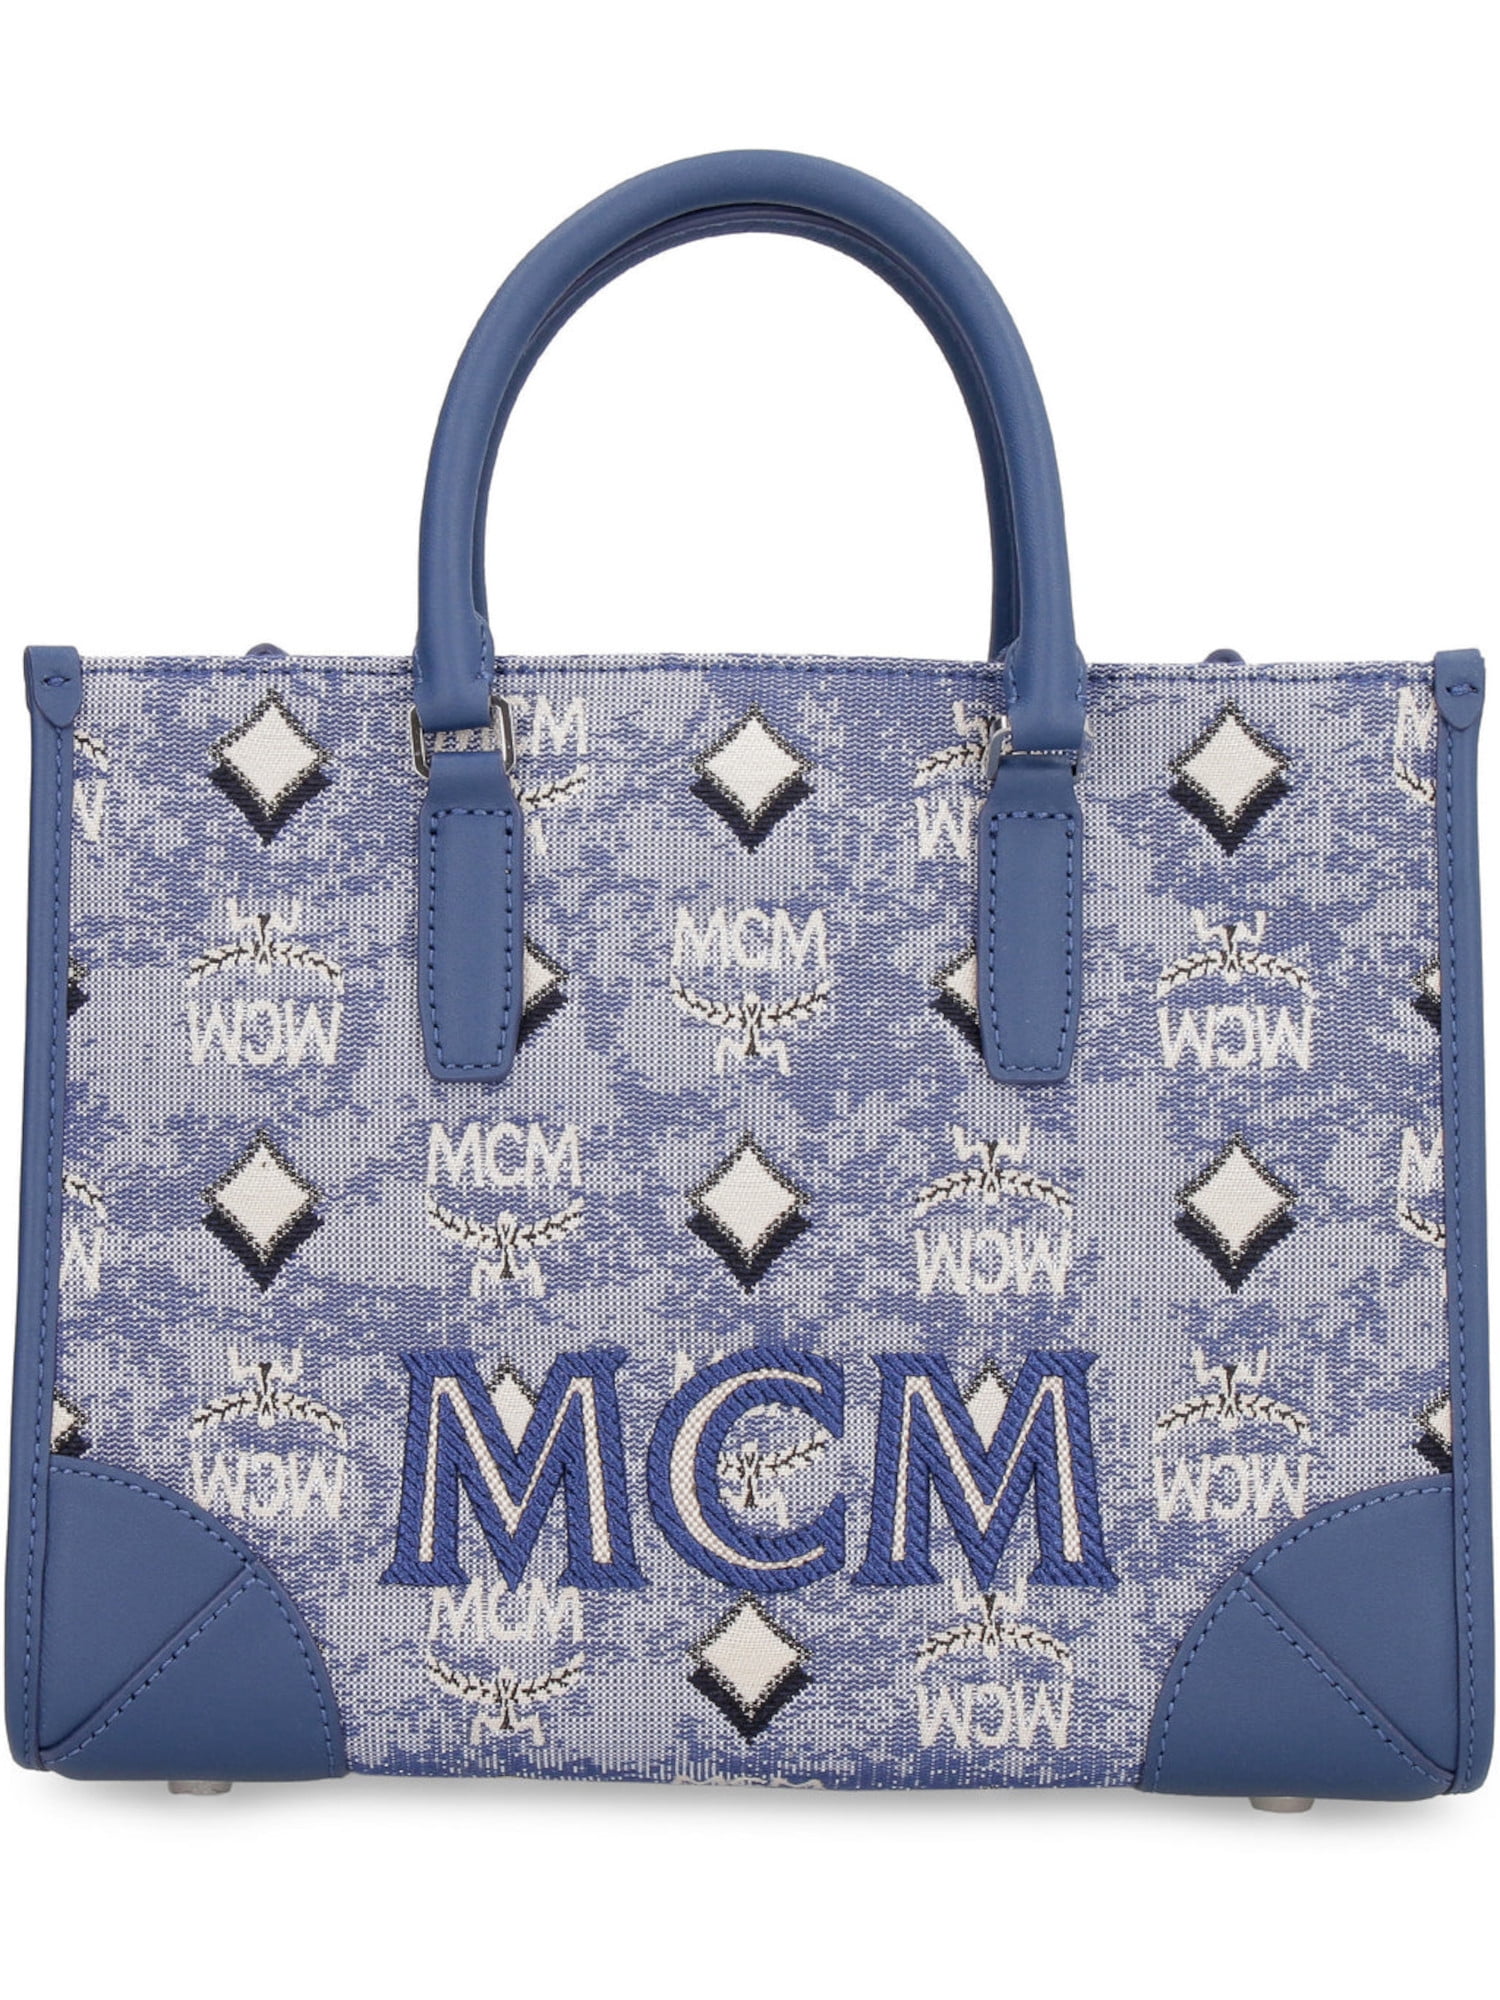 Buy SSDN Women Blue Shoulder Bag Blue Online @ Best Price in India |  Flipkart.com